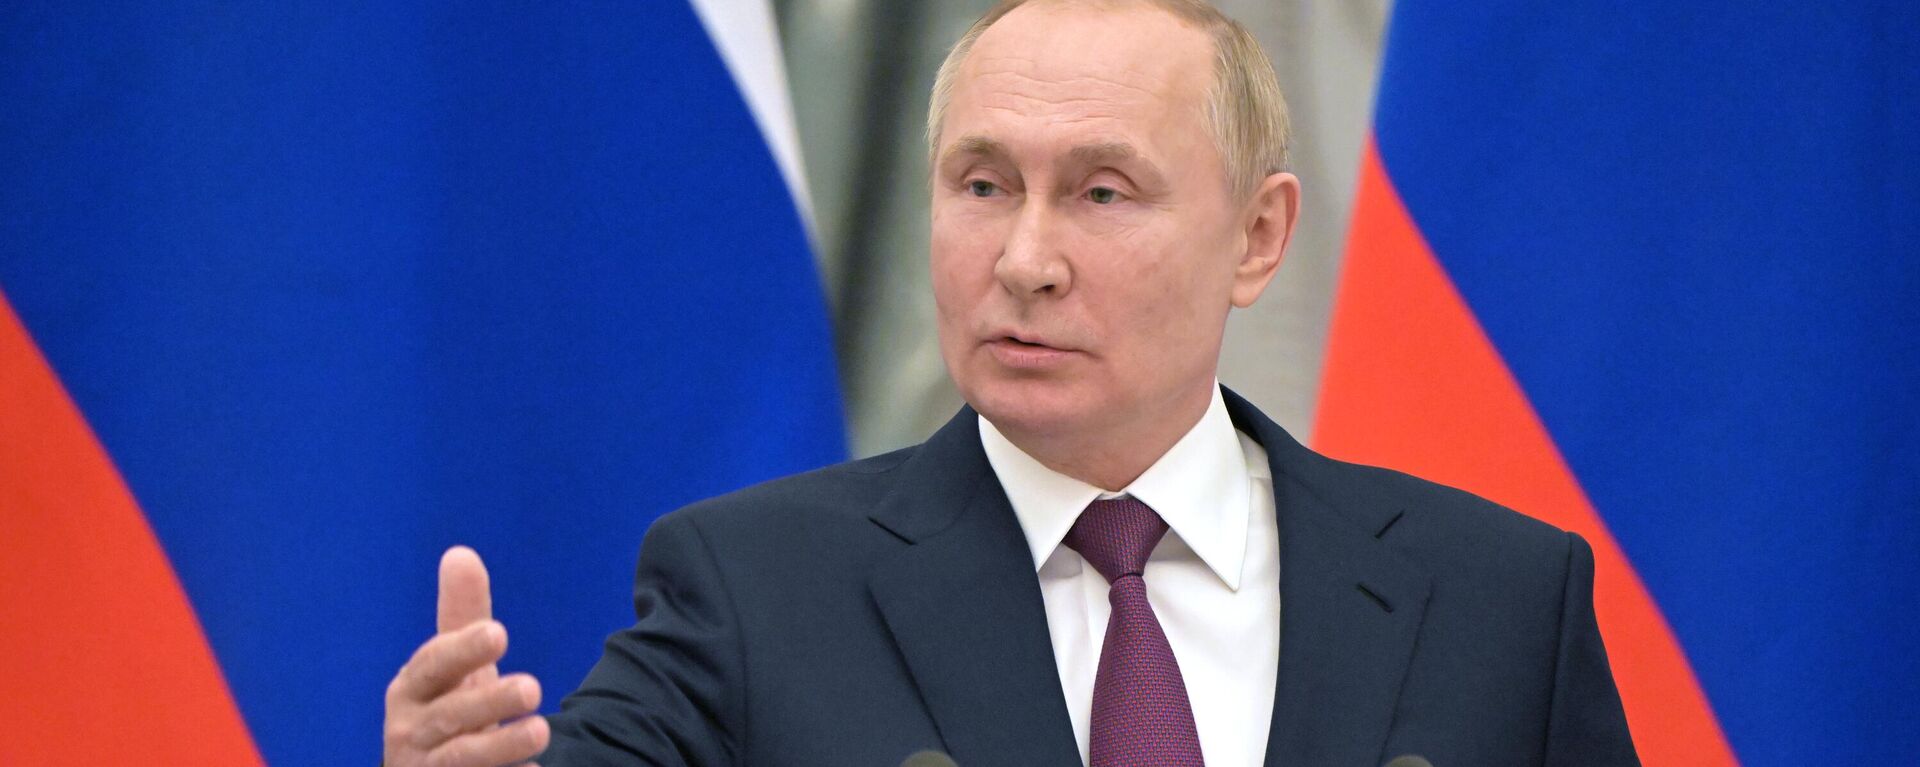 Президент РФ Владимир Путин, 15 февраля 2022 - Sputnik Латвия, 1920, 24.02.2022